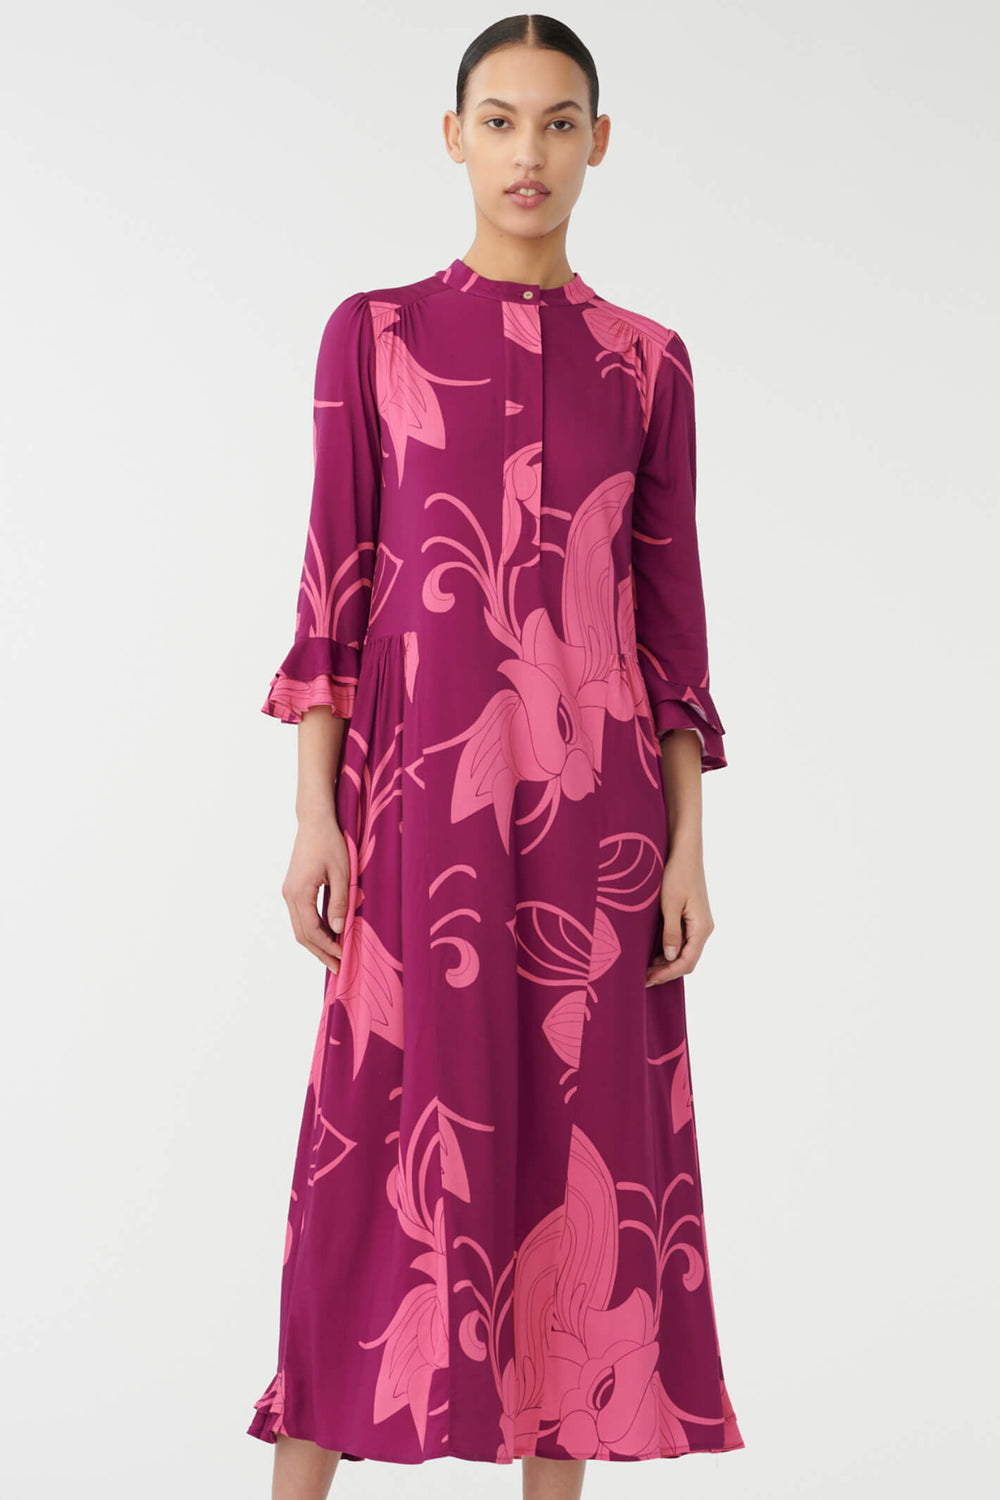 Dea Kudibal Rosanna 0781023 Colossal Grape Pink Ruffle Dress - Olivia Grace Fashion